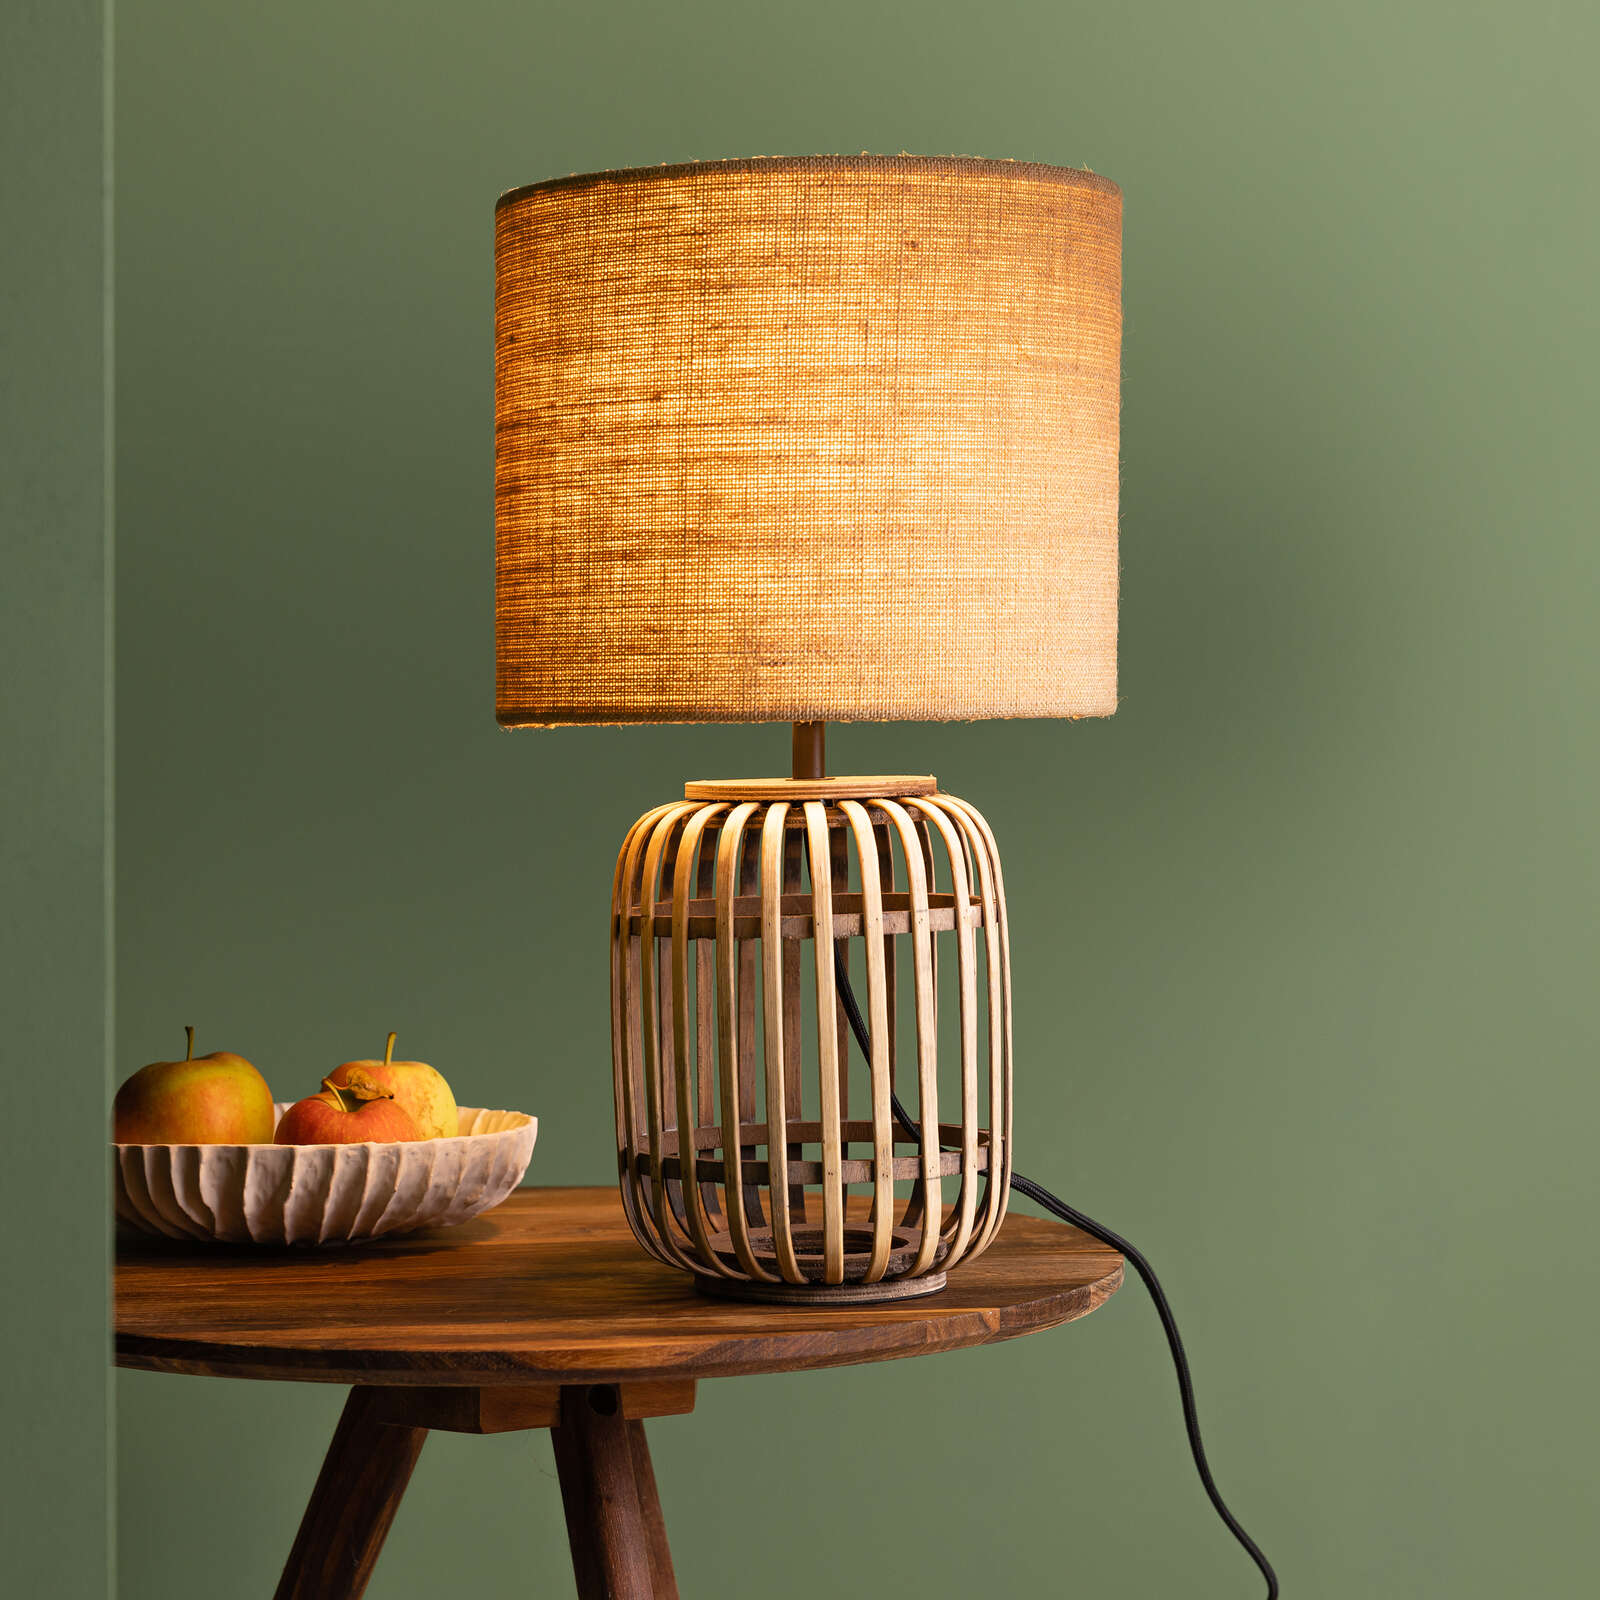             Bamboe tafellamp - Willi 1 - Bruin
        